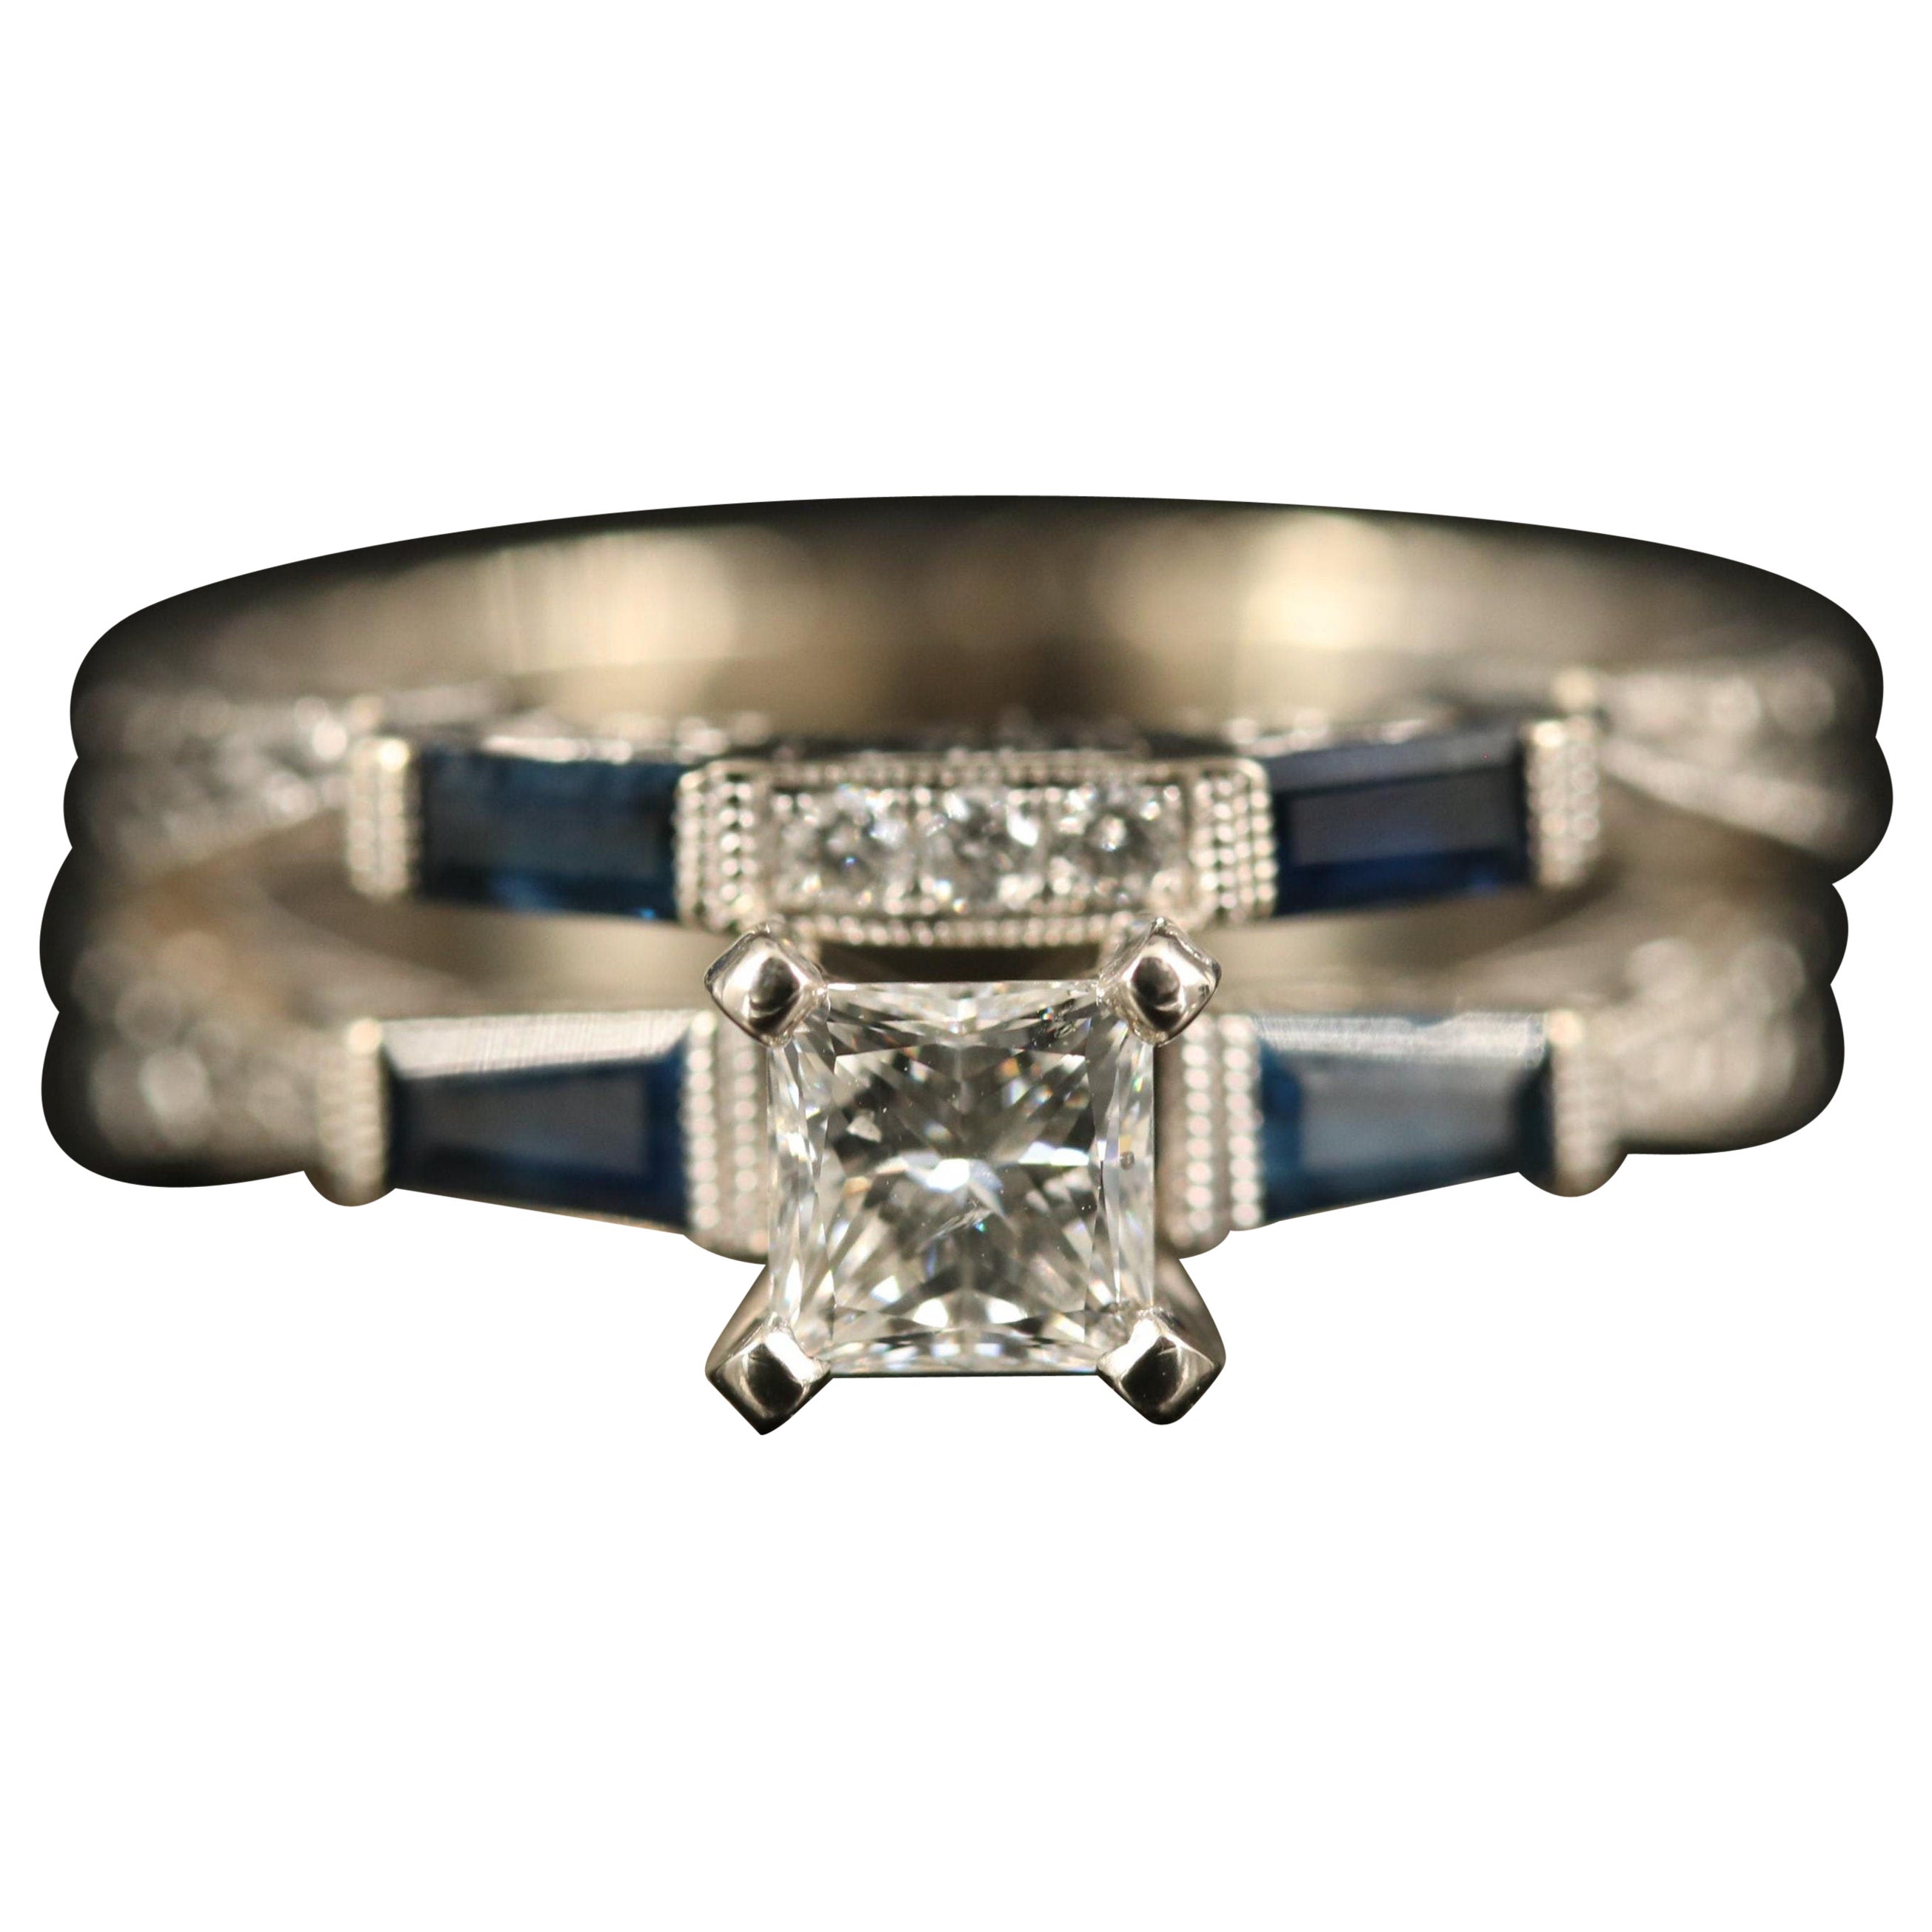 For Sale:  Vintage 1.23 Carat Princess Cut Diamond Sapphire Bridal Ring Set in 18K Gold